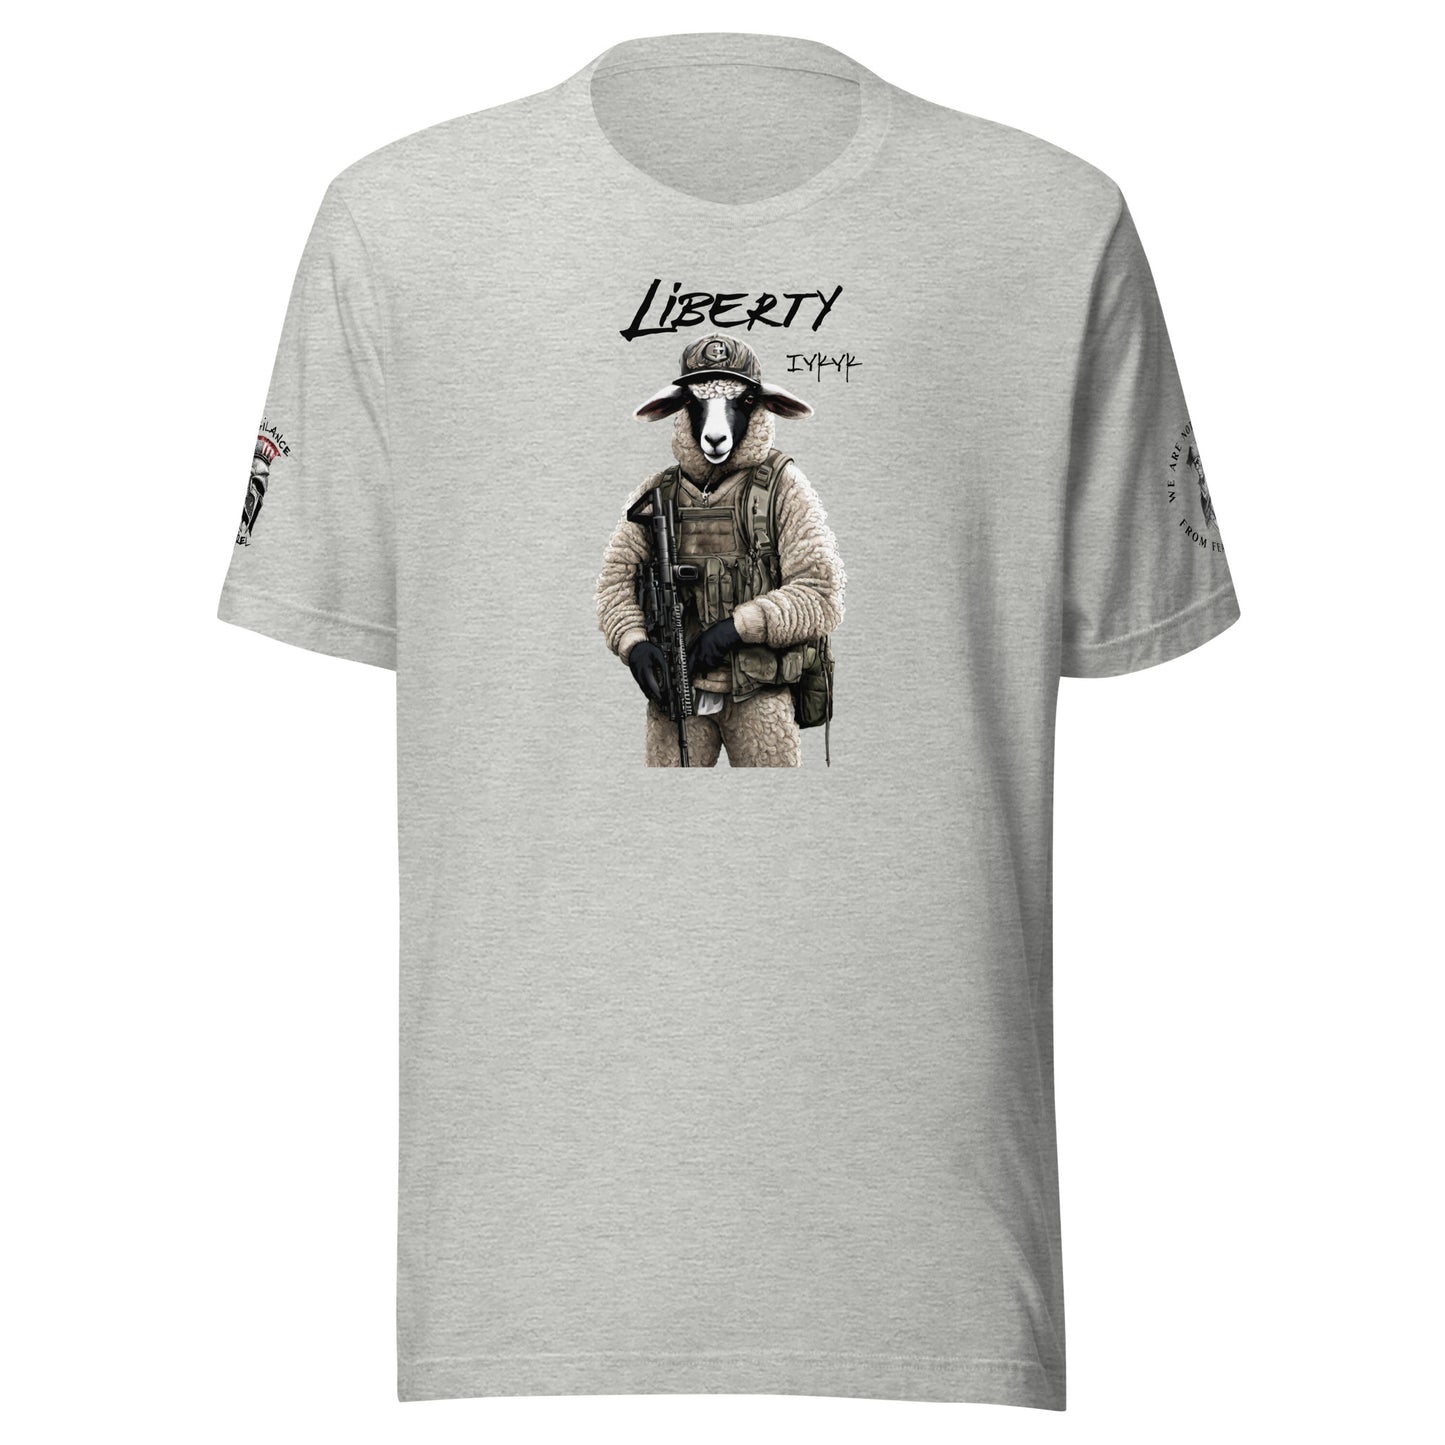 Liberty Lamb IYKYK (logo & minuteman sleeve) Limited Men's T-Shirt Athletic Heather